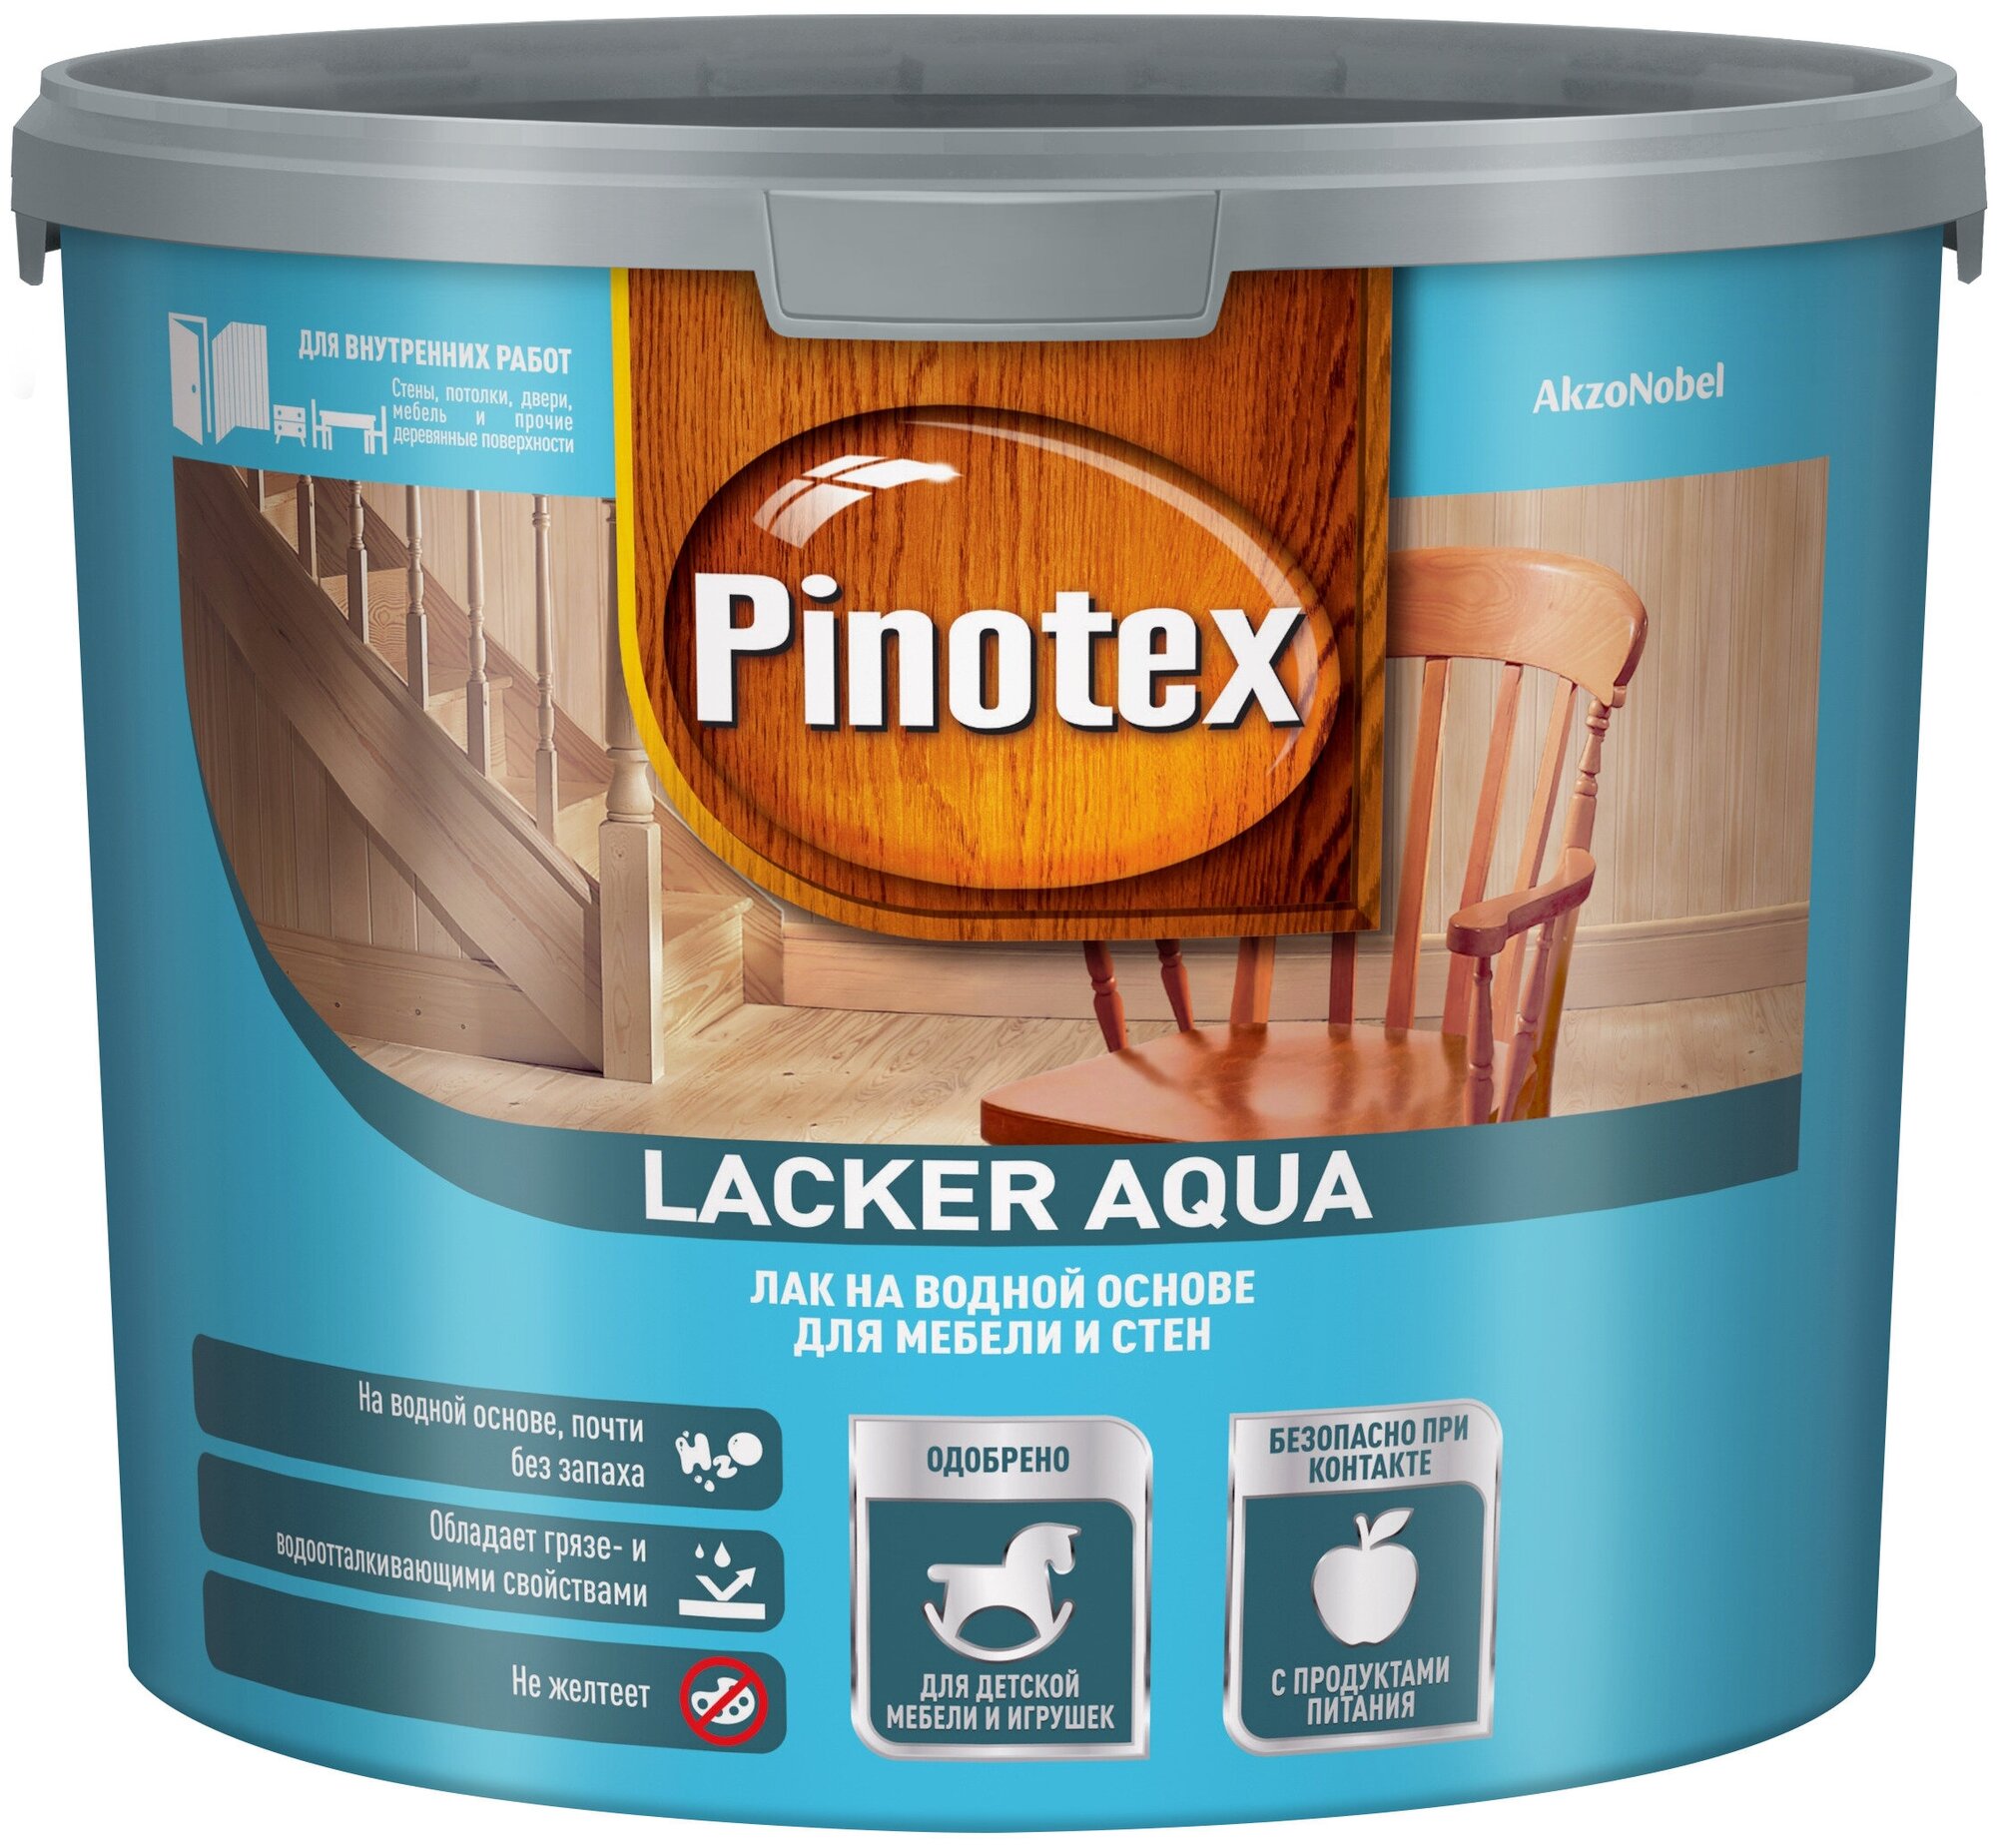 Pinotex Lacker Aqua, 2.7л, Глянцевый 70